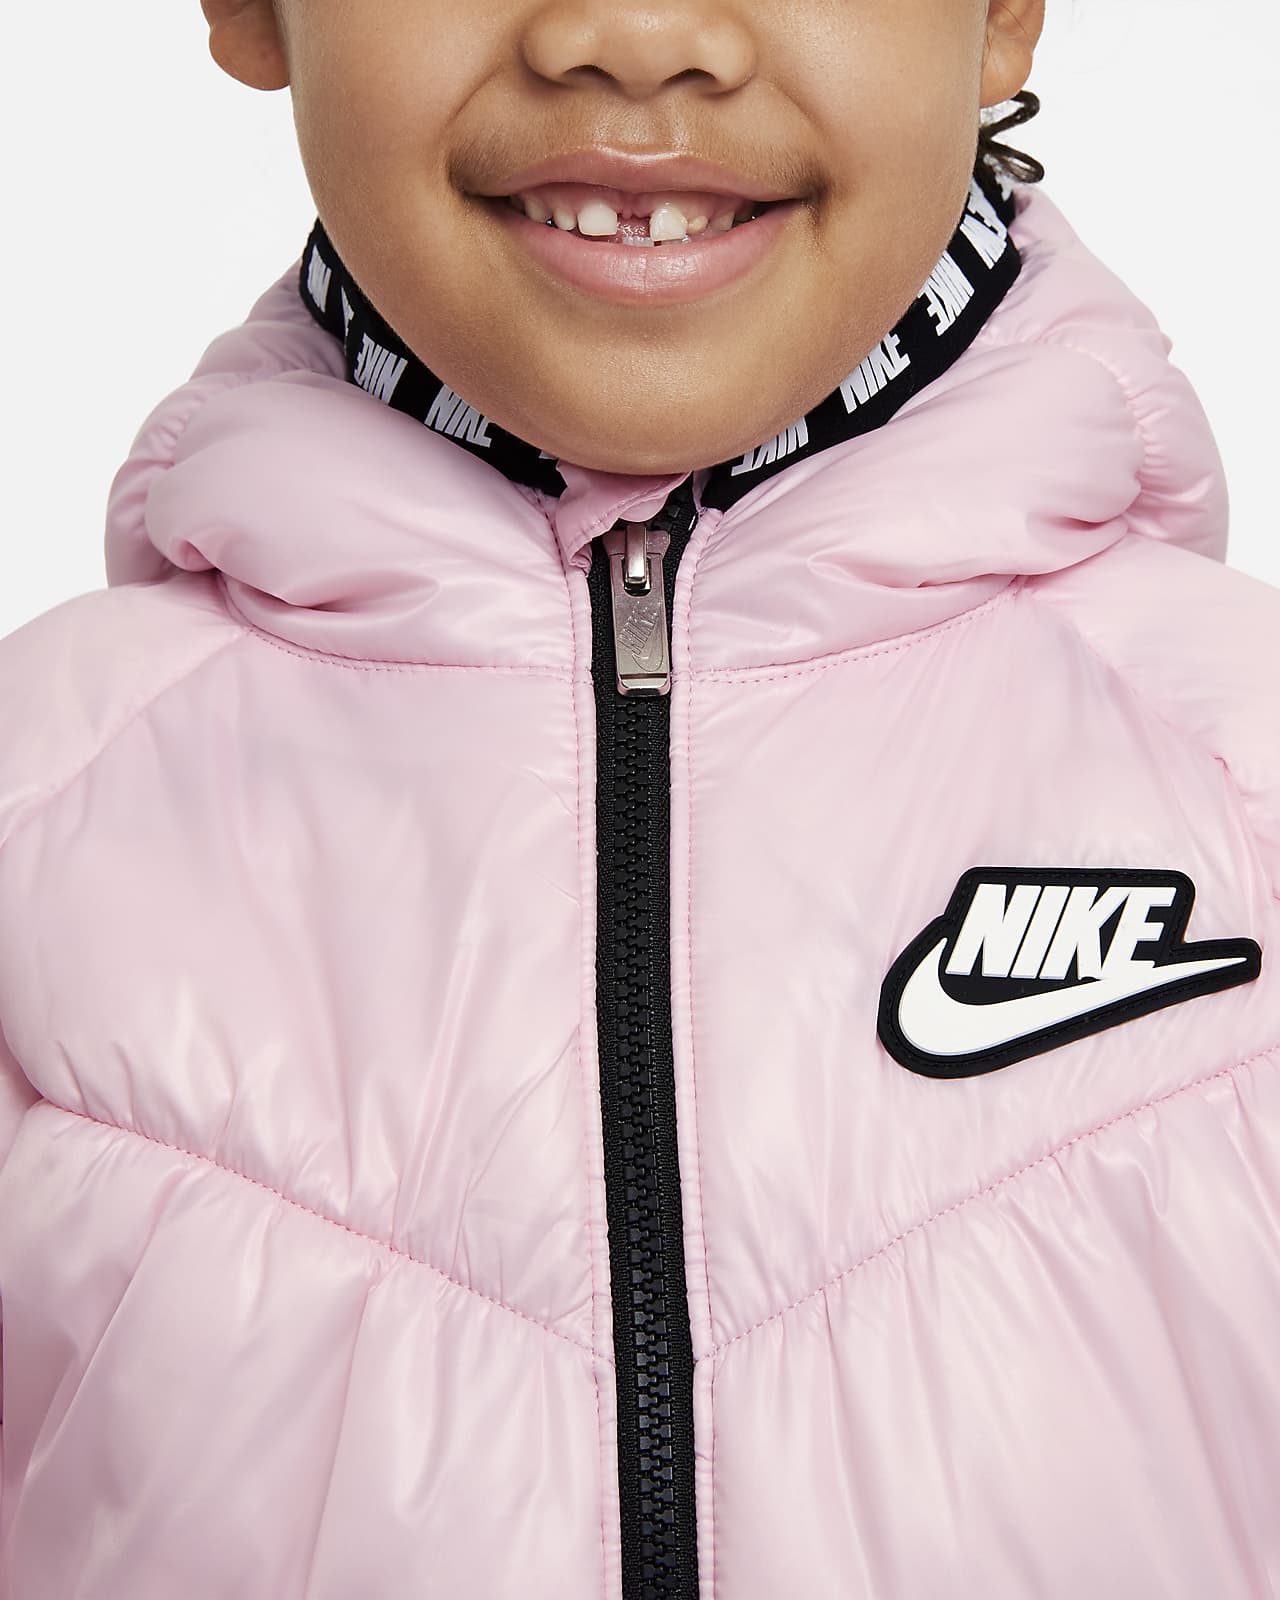 Nike acolchada - Niño/a pequeño/a. ES